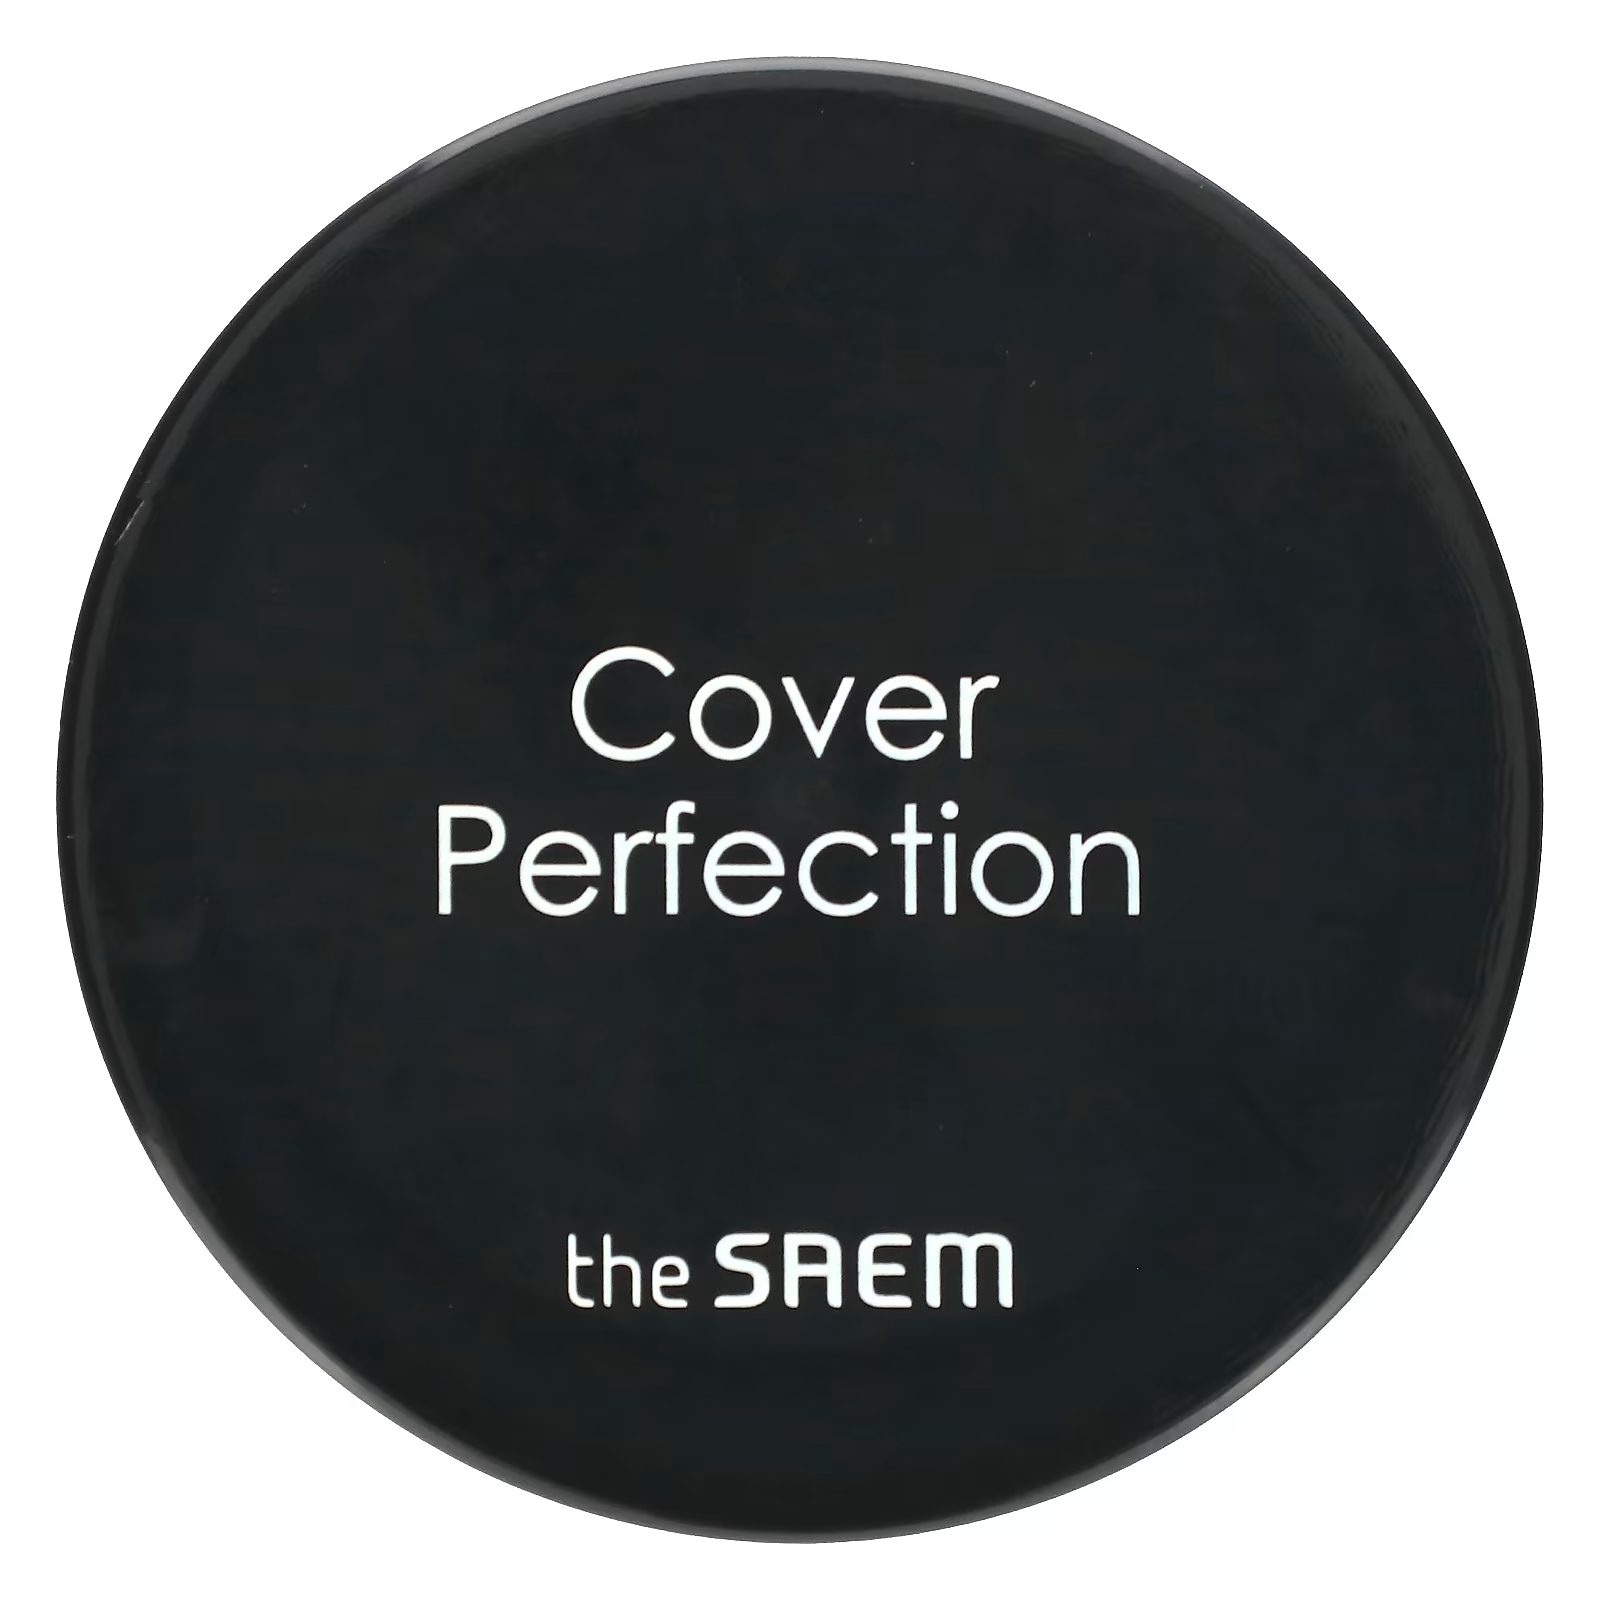 Бальзам-консилер The Saem Cover Perfection Pot Concealer 01 Clear Beige консилер 01 6 5 гр cover perfection tip concealer 01 clear beige the saem